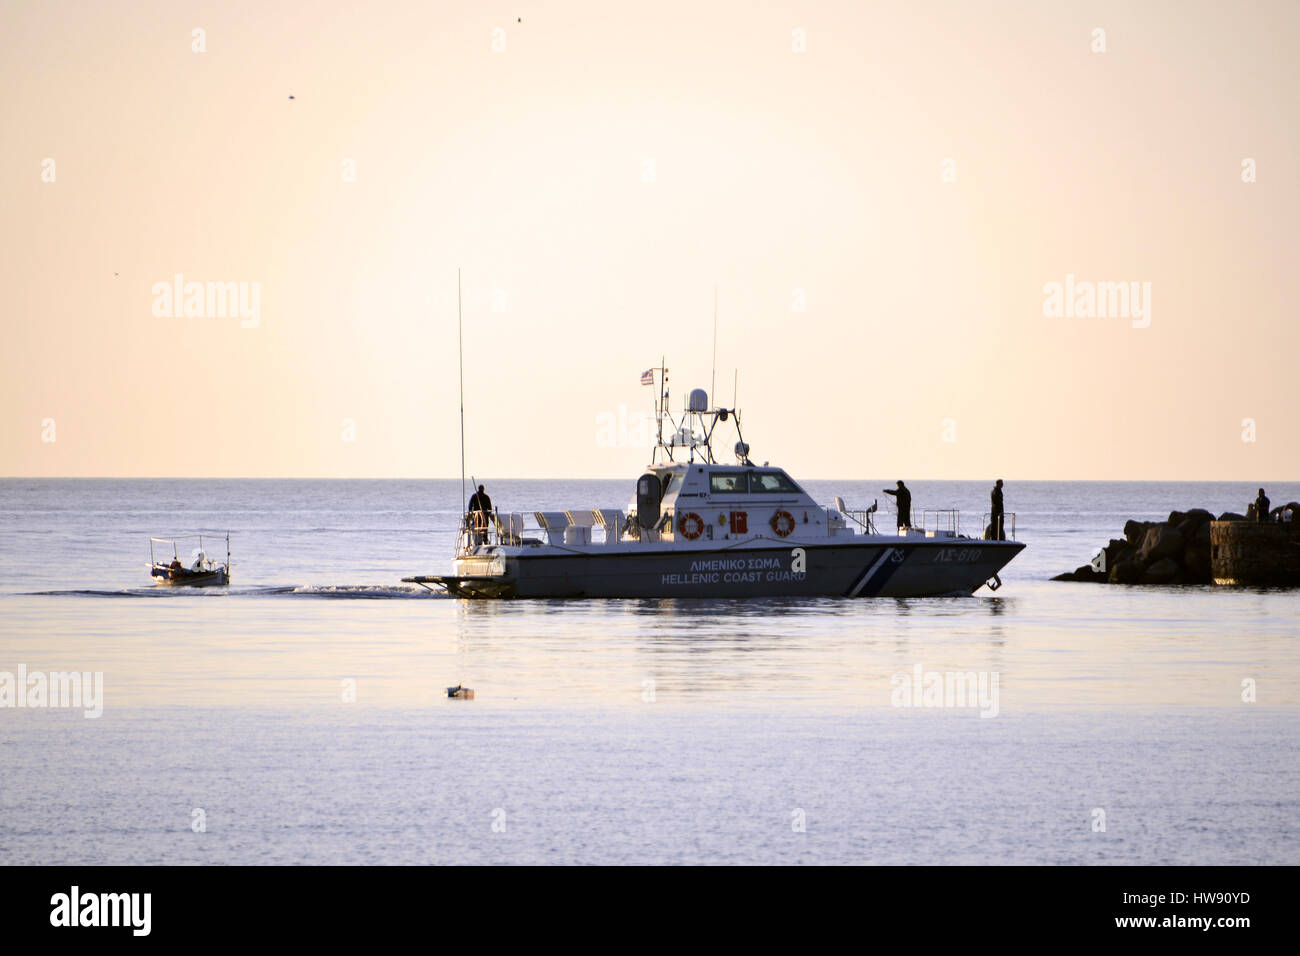 Greek coastguard hi-res stock photography and images - Alamy